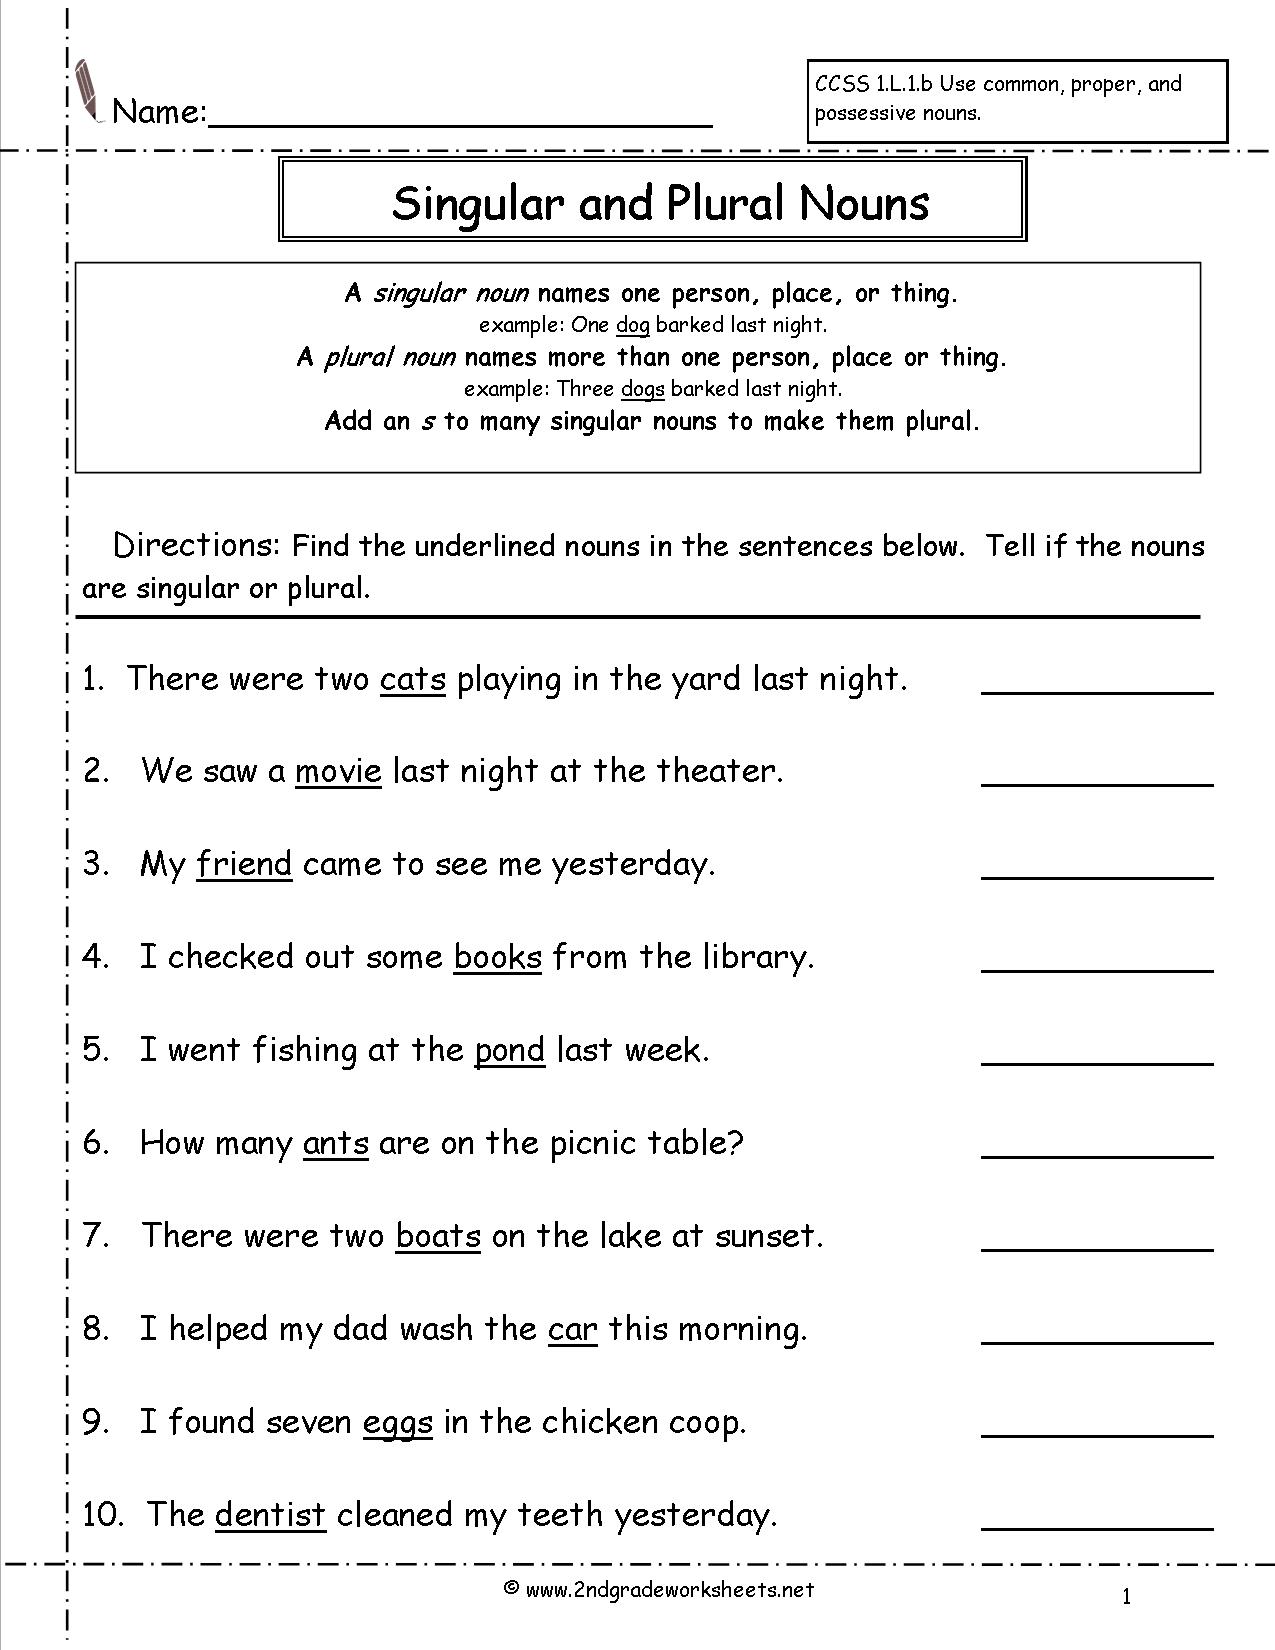 worksheets-on-singular-and-plural-nouns